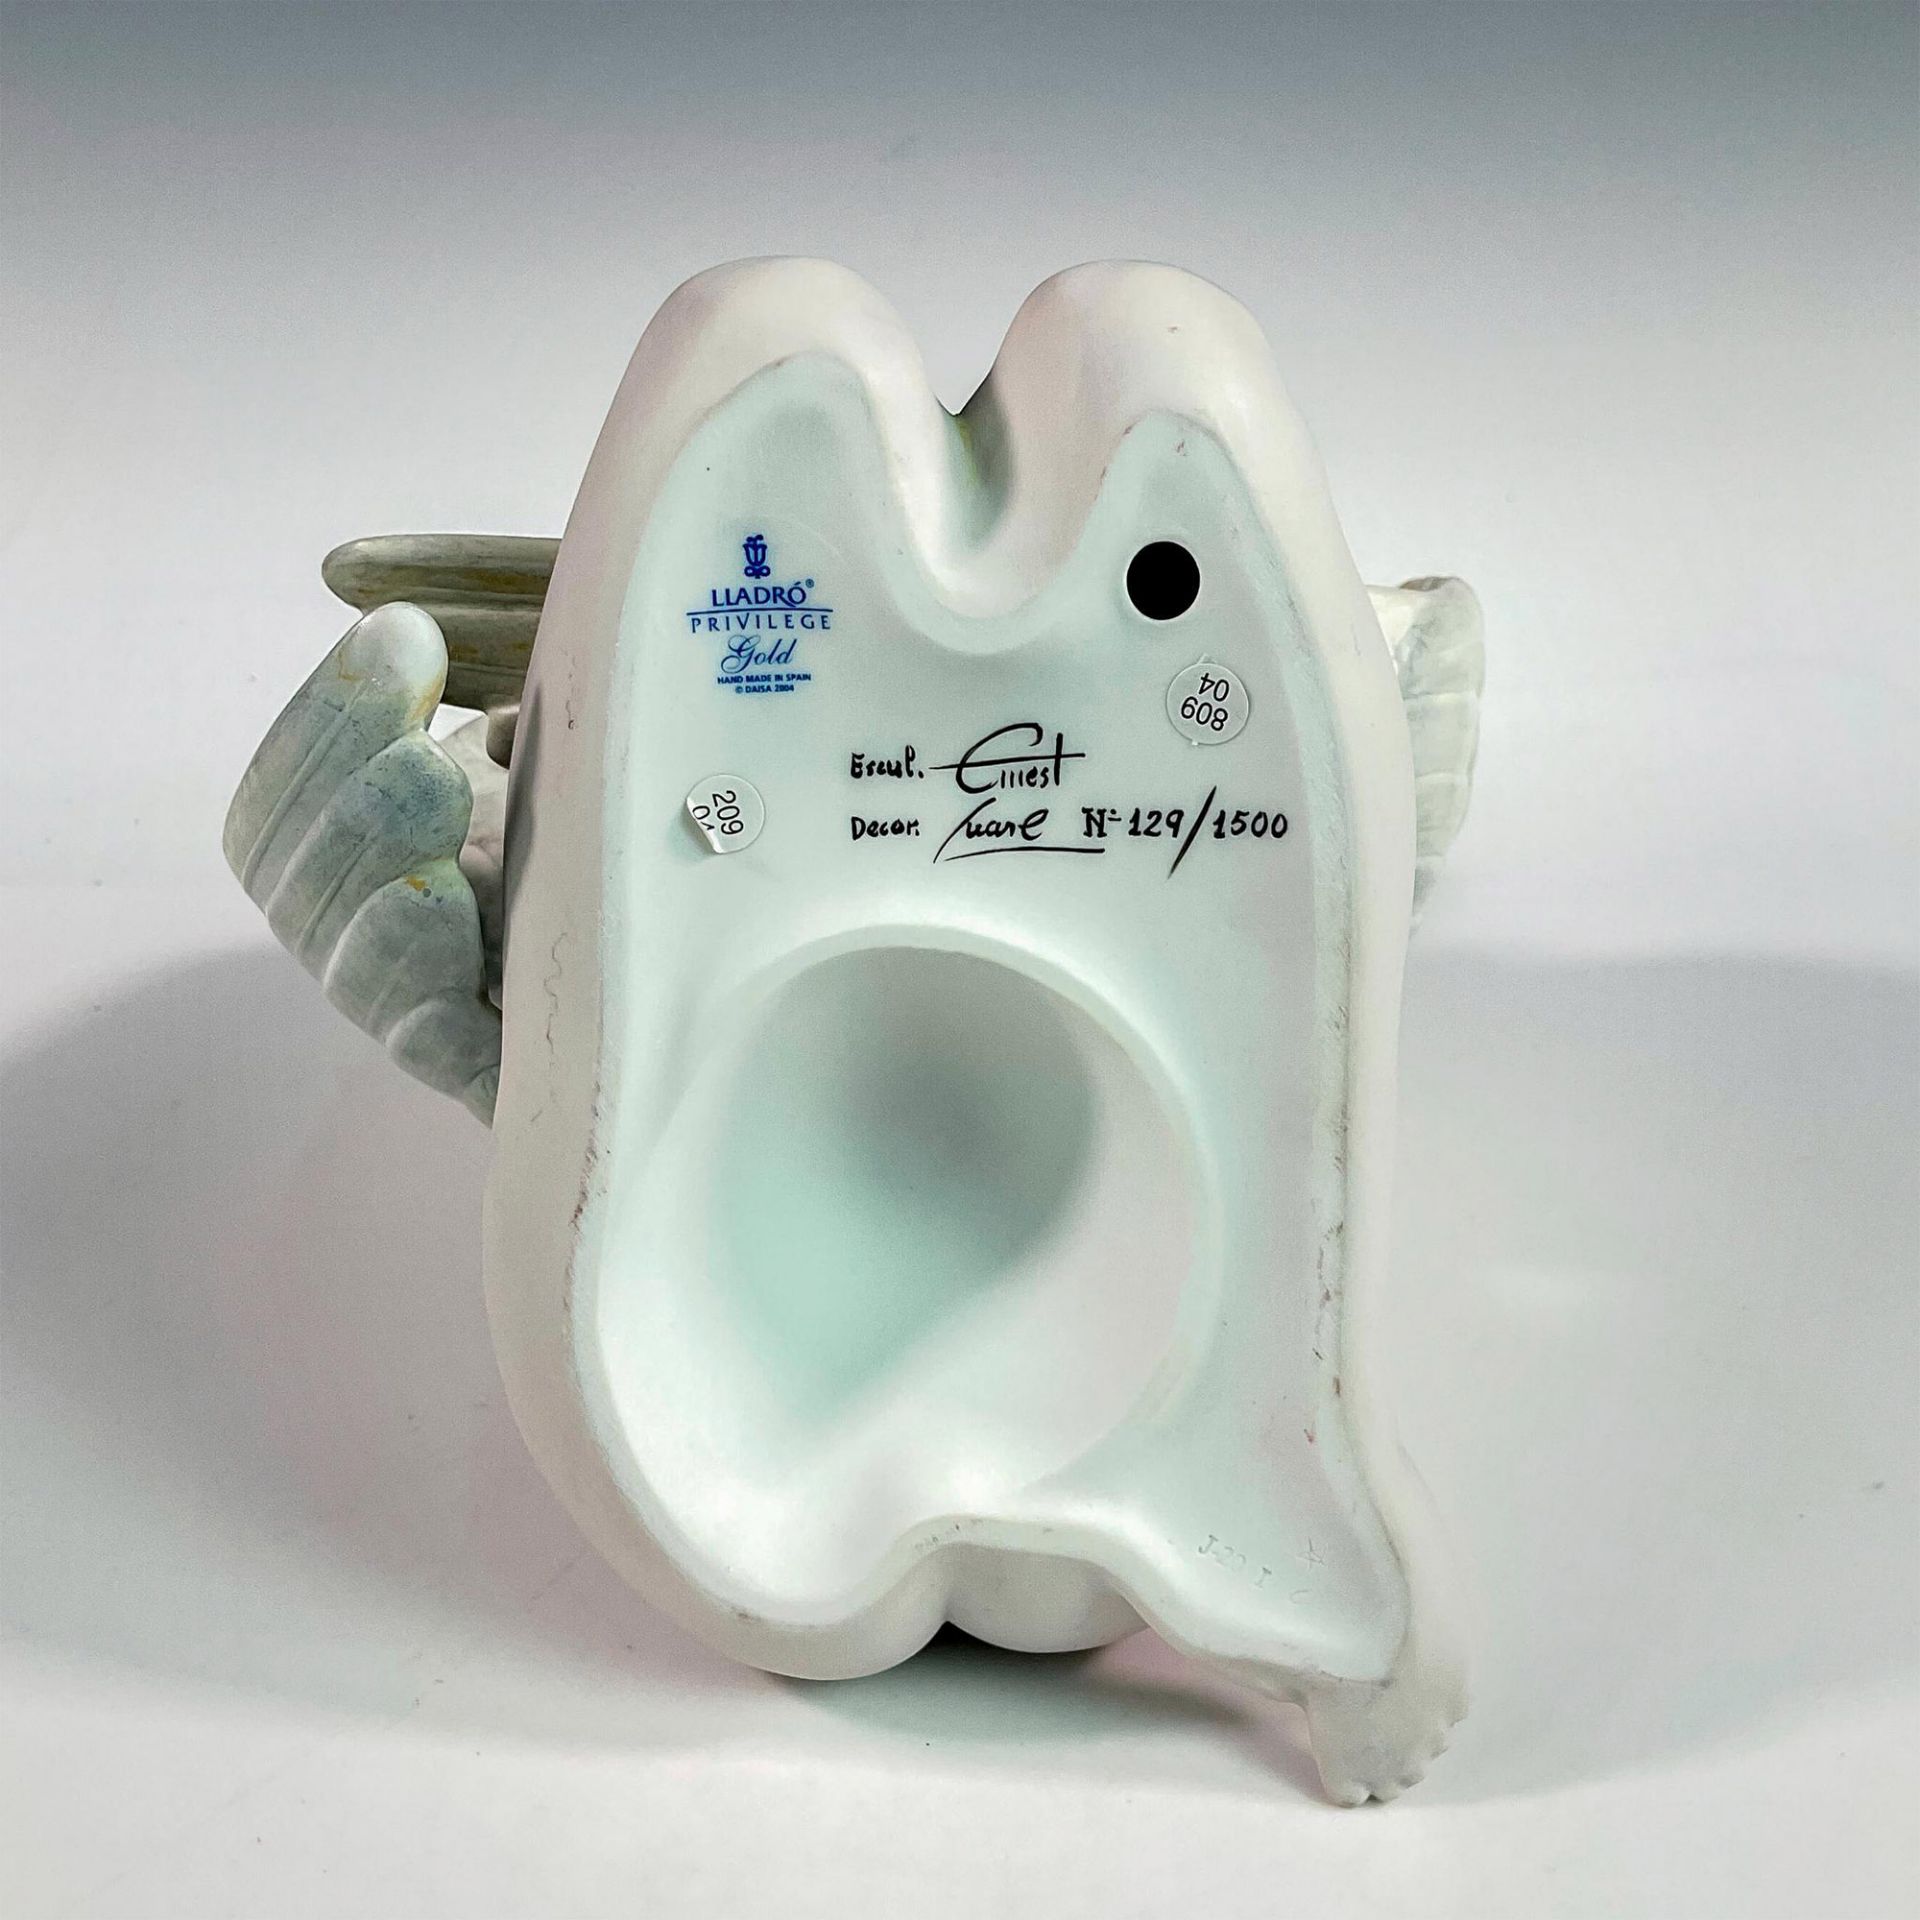 You're My Angel 1011906 Ltd. - Lladro Porcelain Figurine - Image 3 of 3